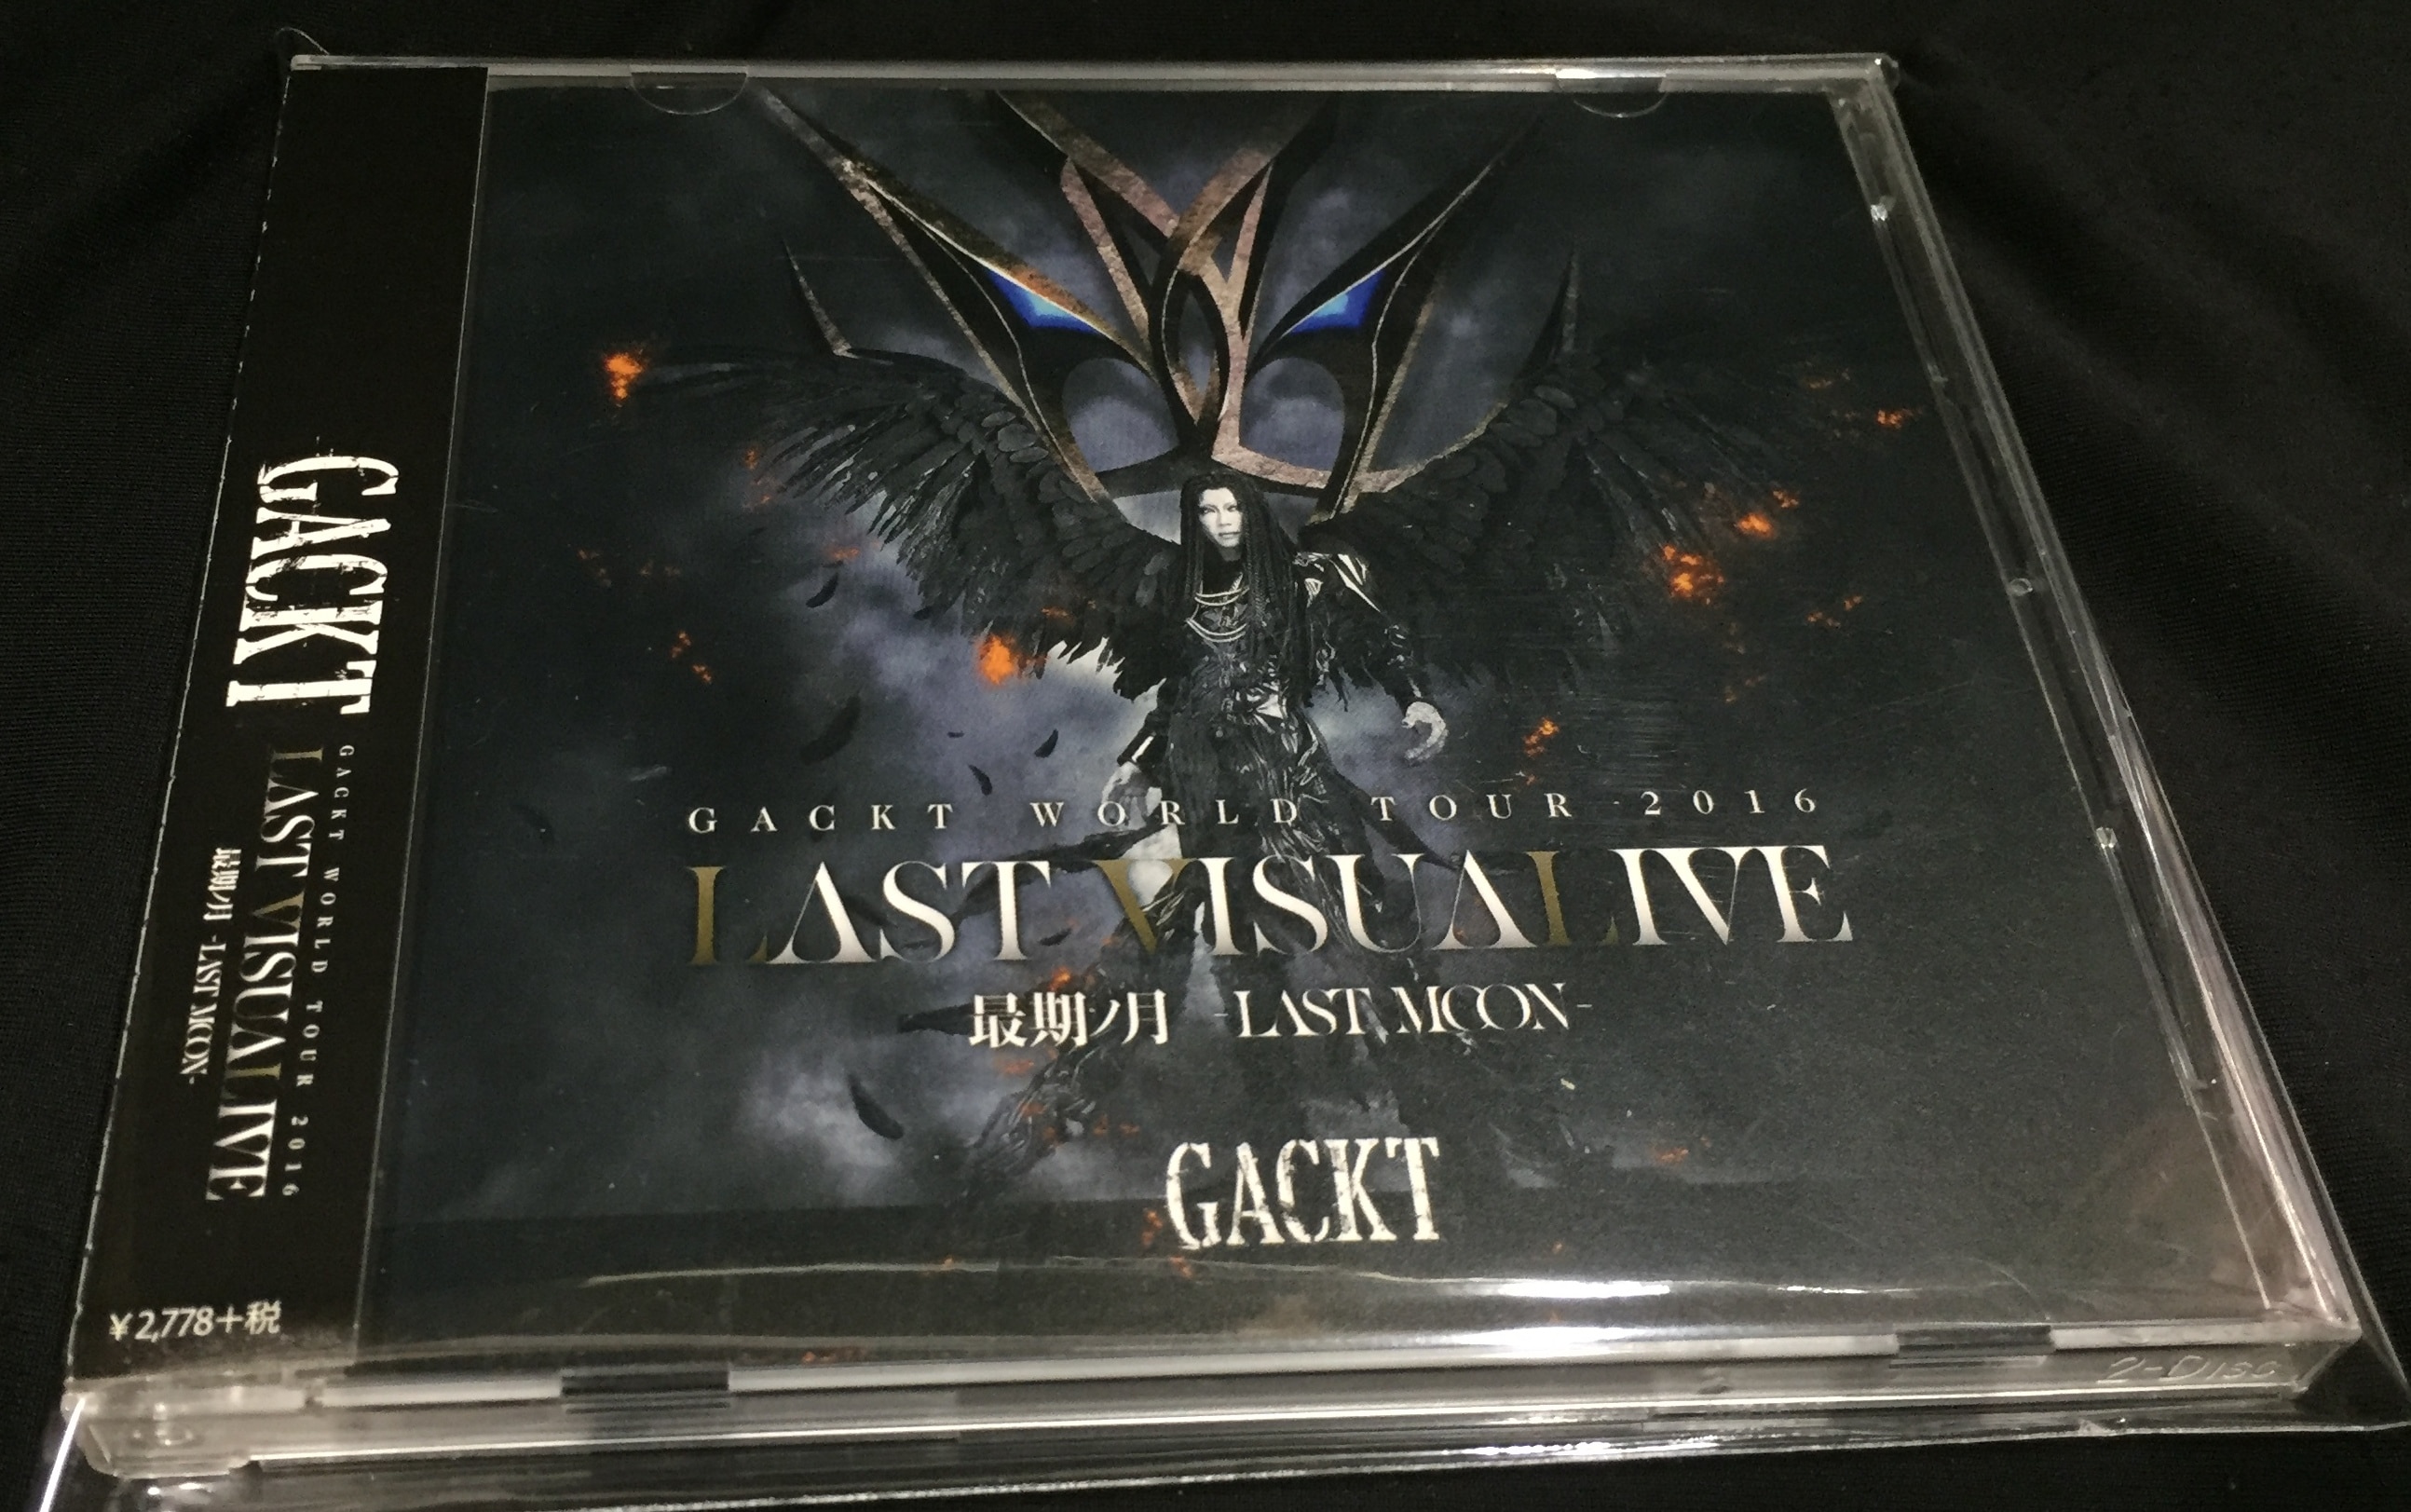 GACKT ライブ会場限定(2CD) GACKT WORLD TOUR 2016 LAST VISUALIVE